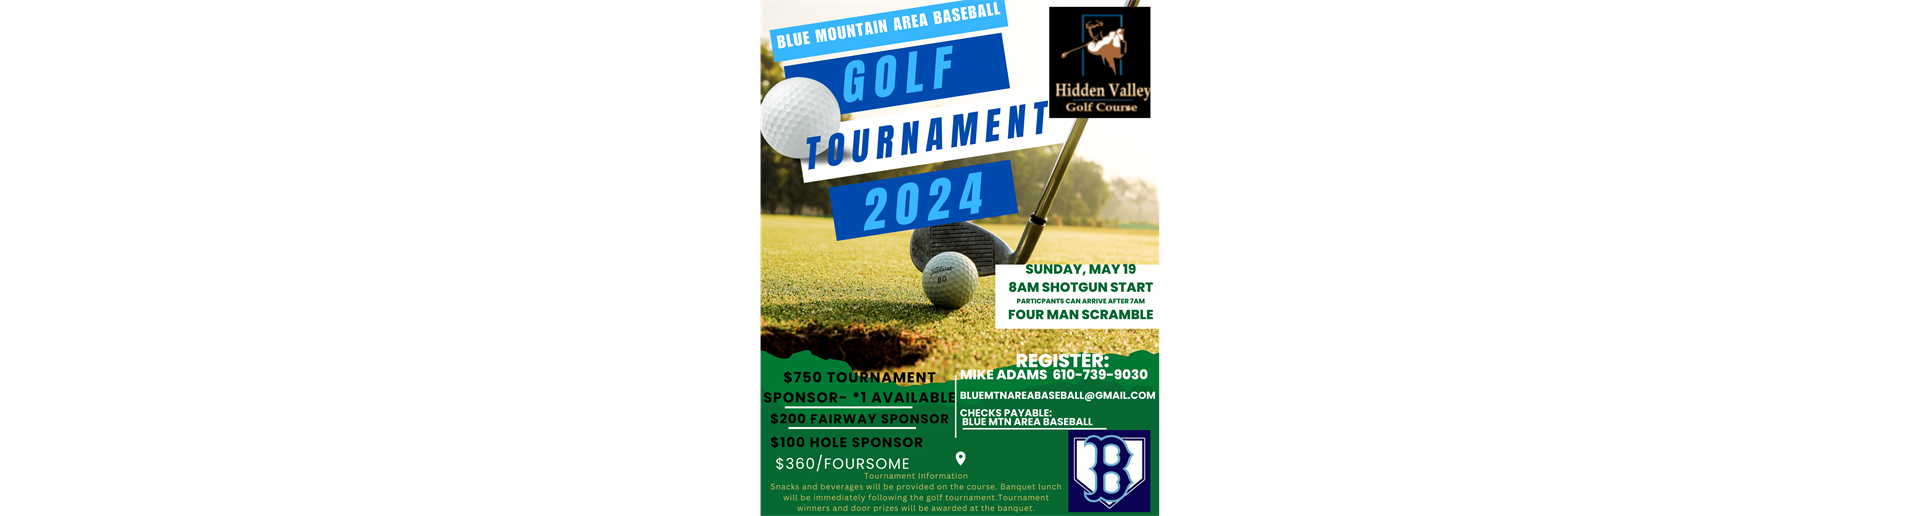 Bue Mountain Area Baseball Golf Tournament